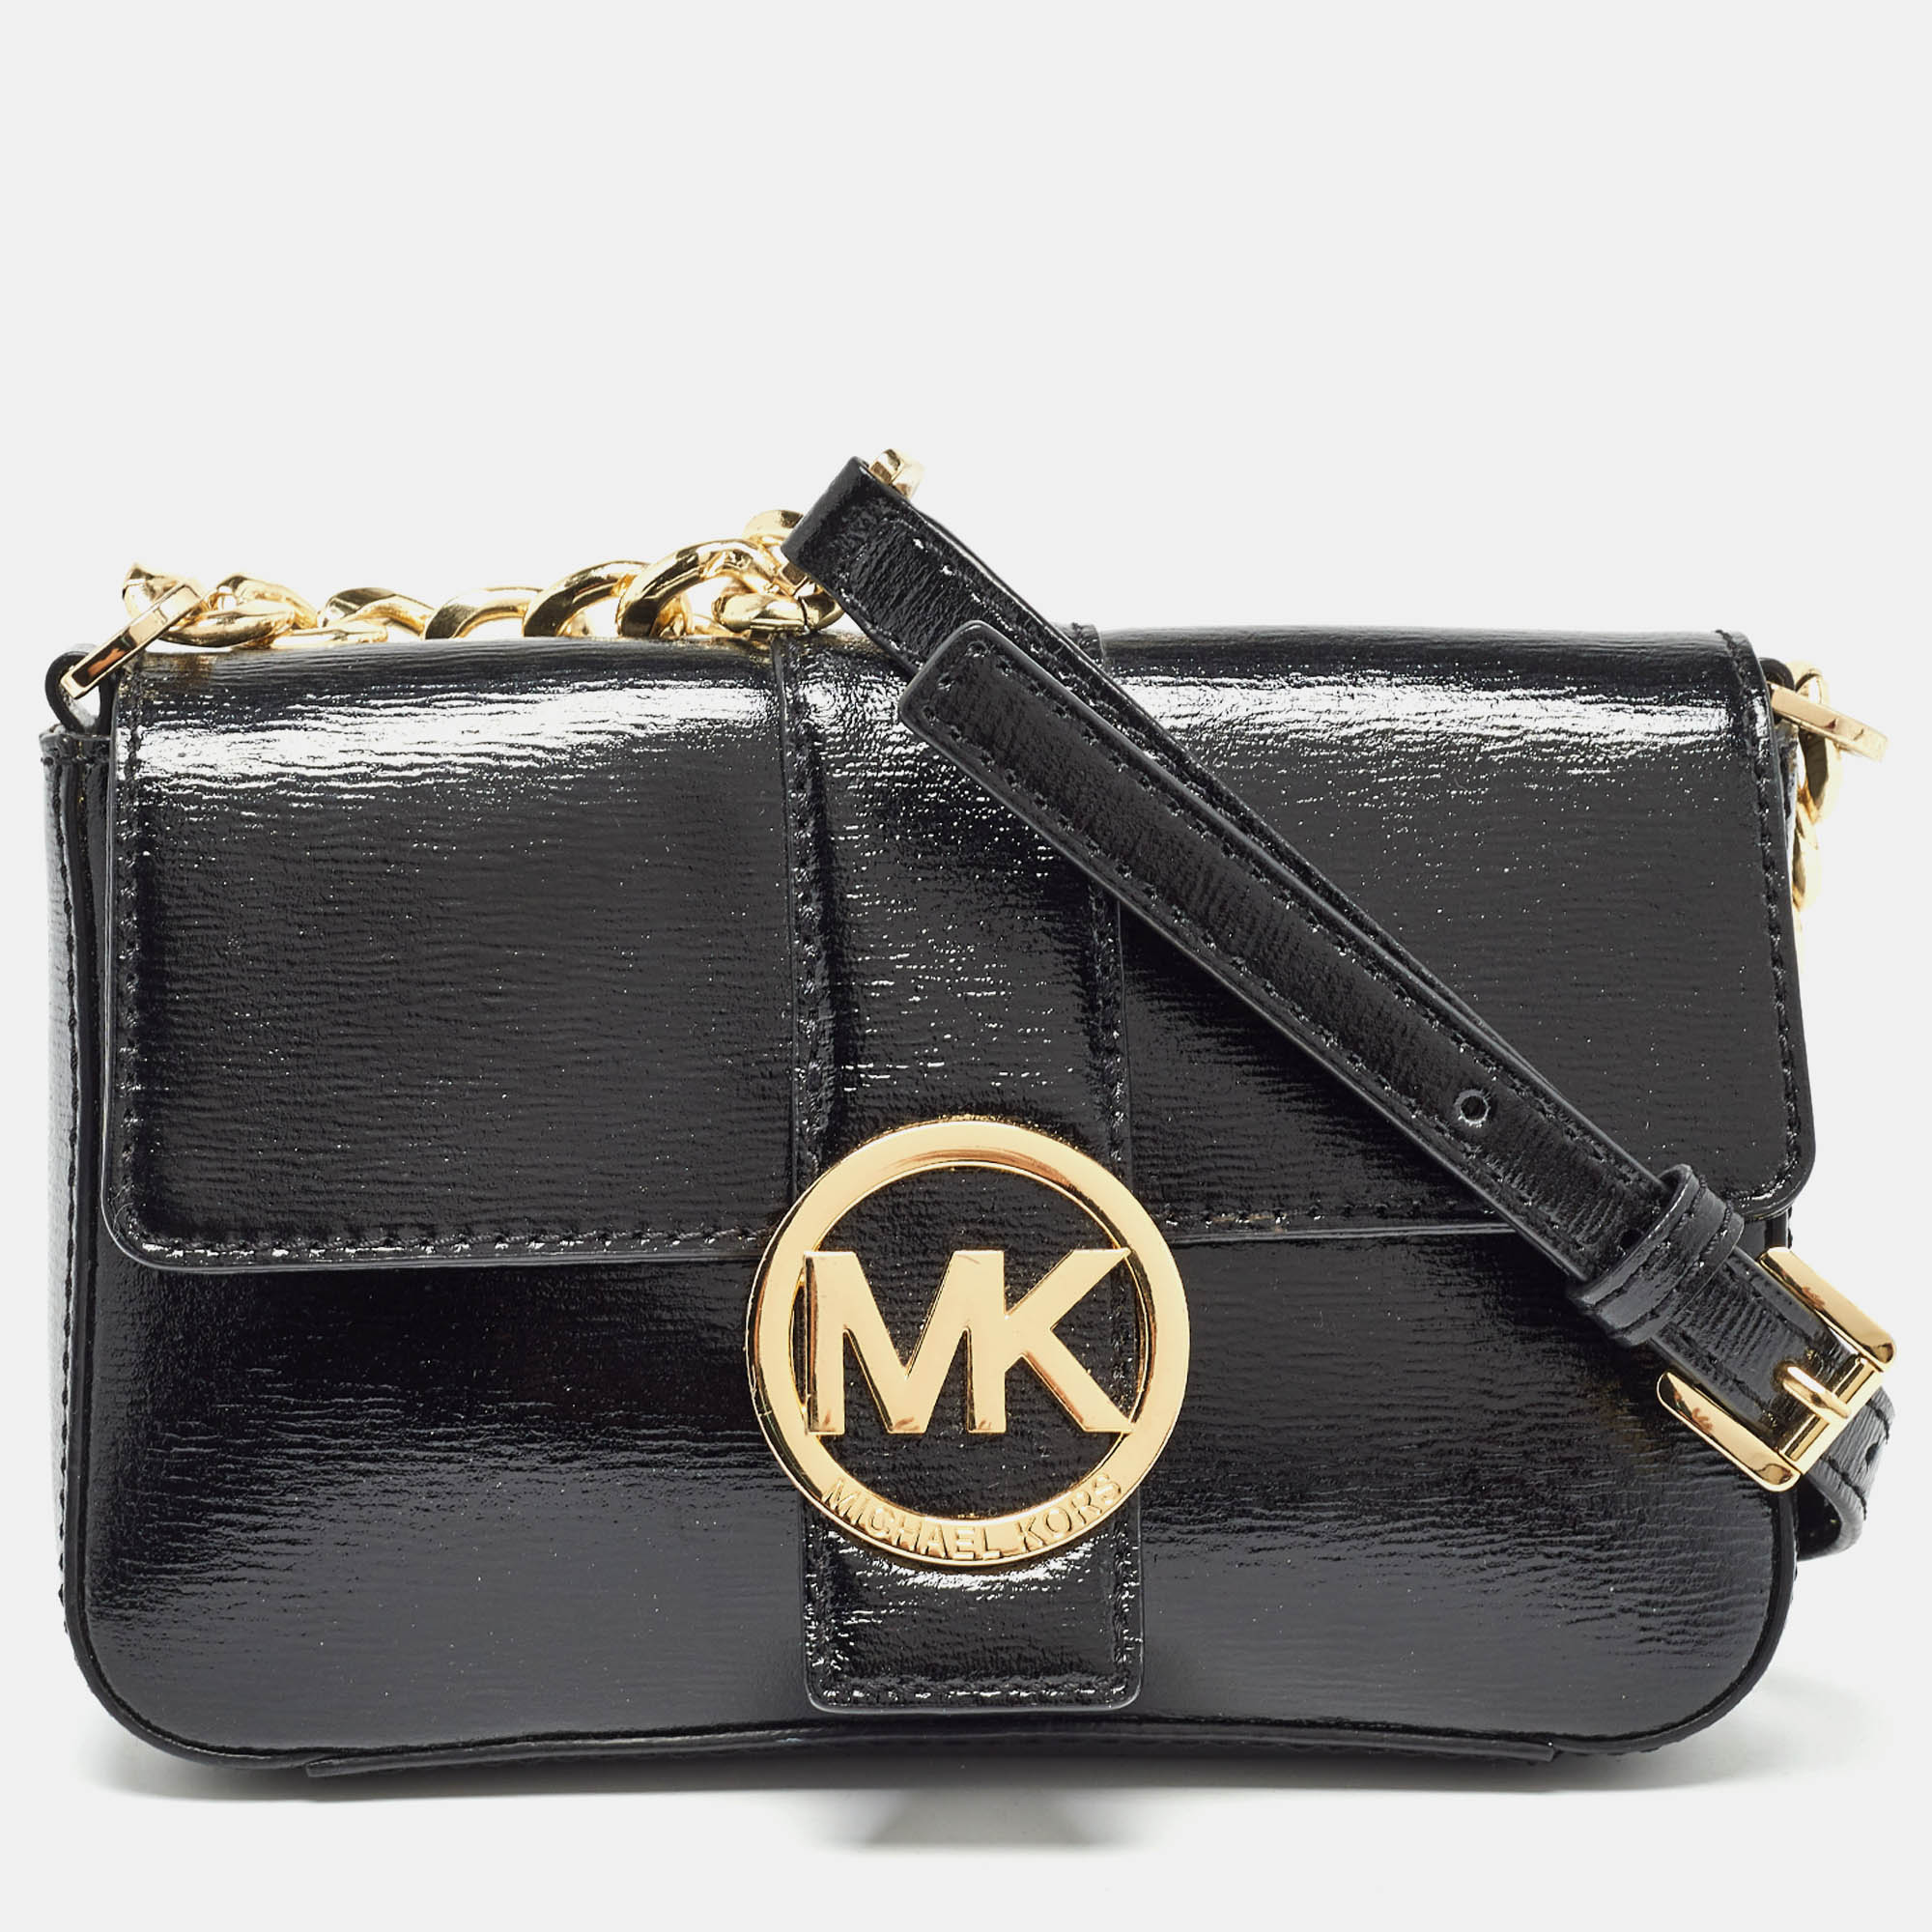 

Michael Kors Black Patent Leather Fulton Flap Crossbody Bag